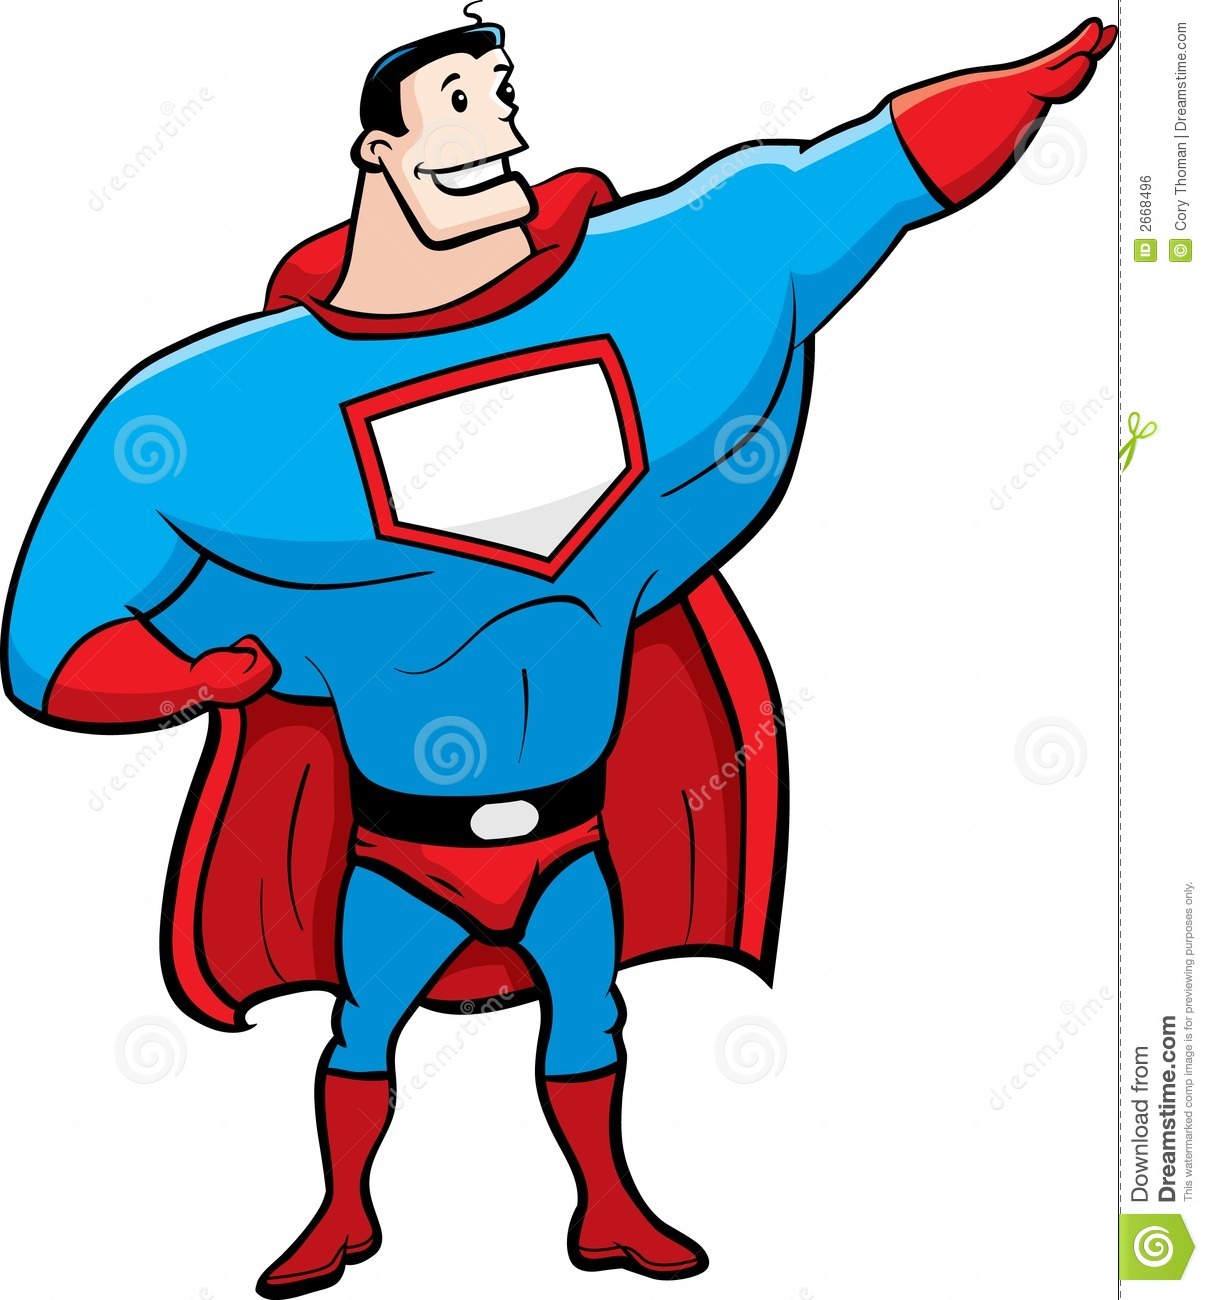 Superhero Clip Art Superhero Royalty Free Stock Image Image